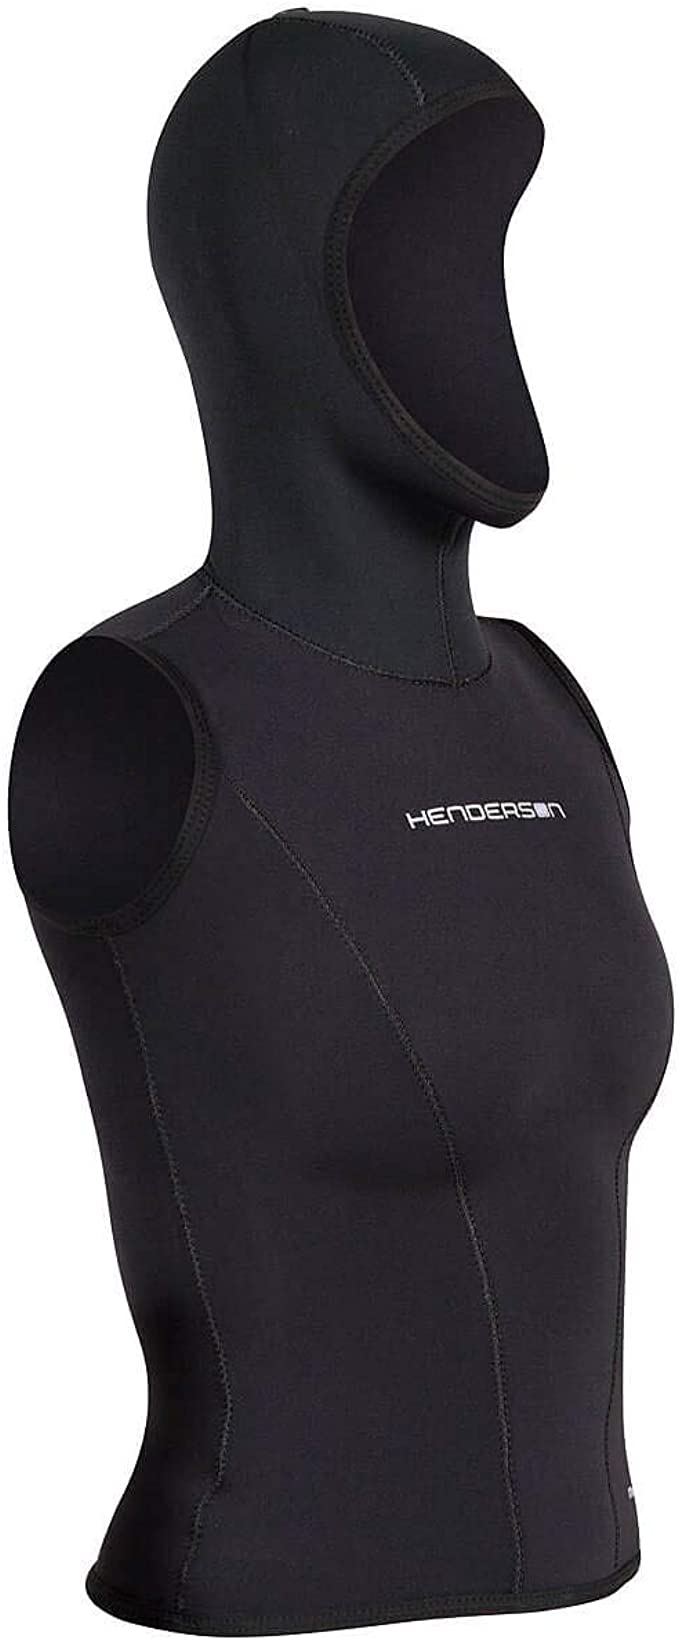 Henderson Thermoprene Pro Women's 5/3mm Hooded Vest